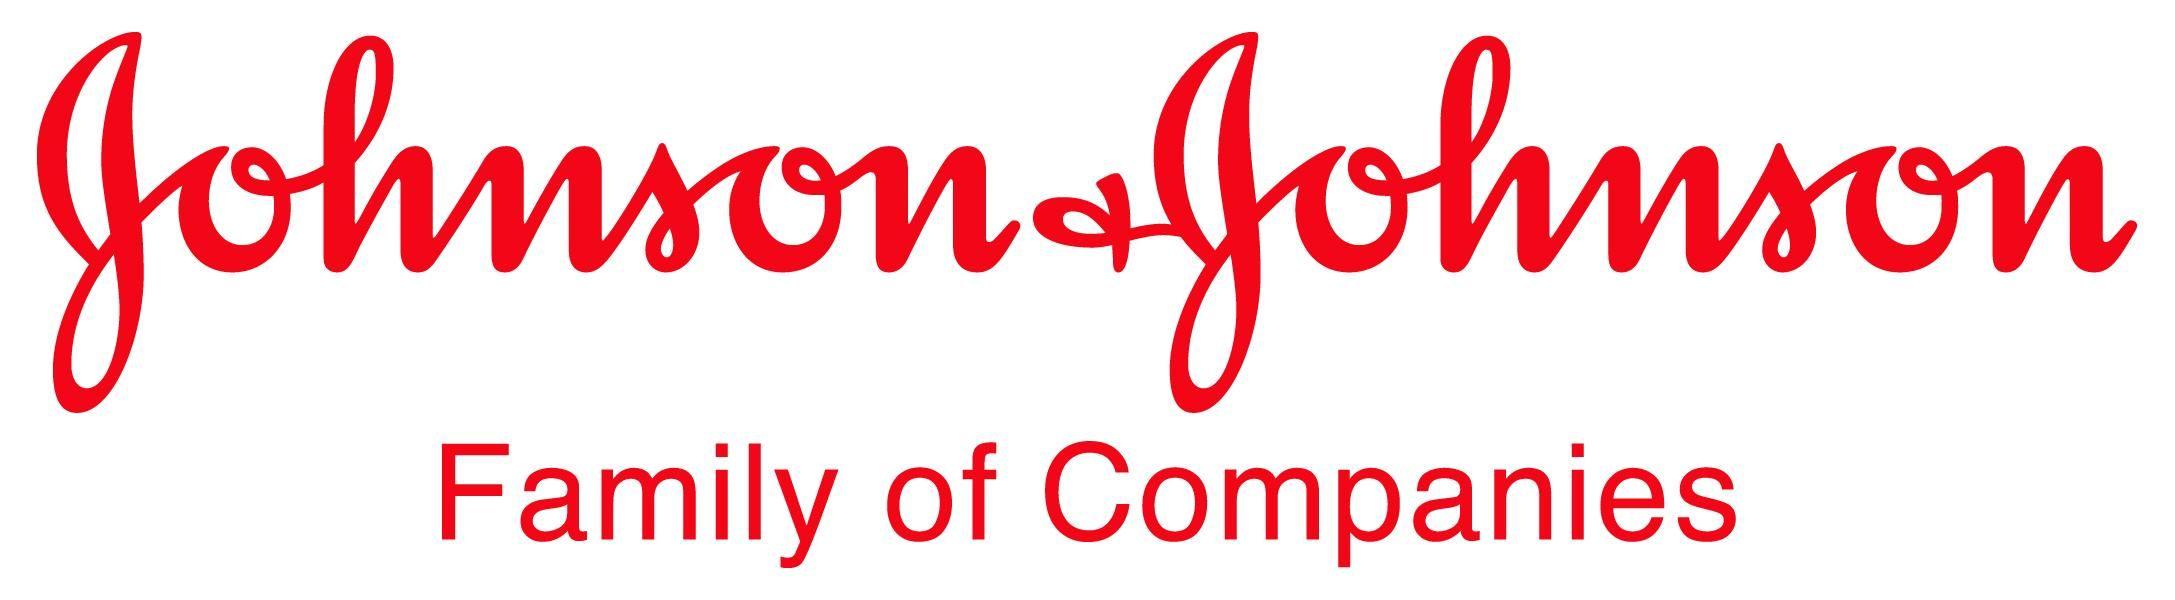 Johnson and Johnson Logo - Update Nov 2016 Sarah Lobley [Infographic]